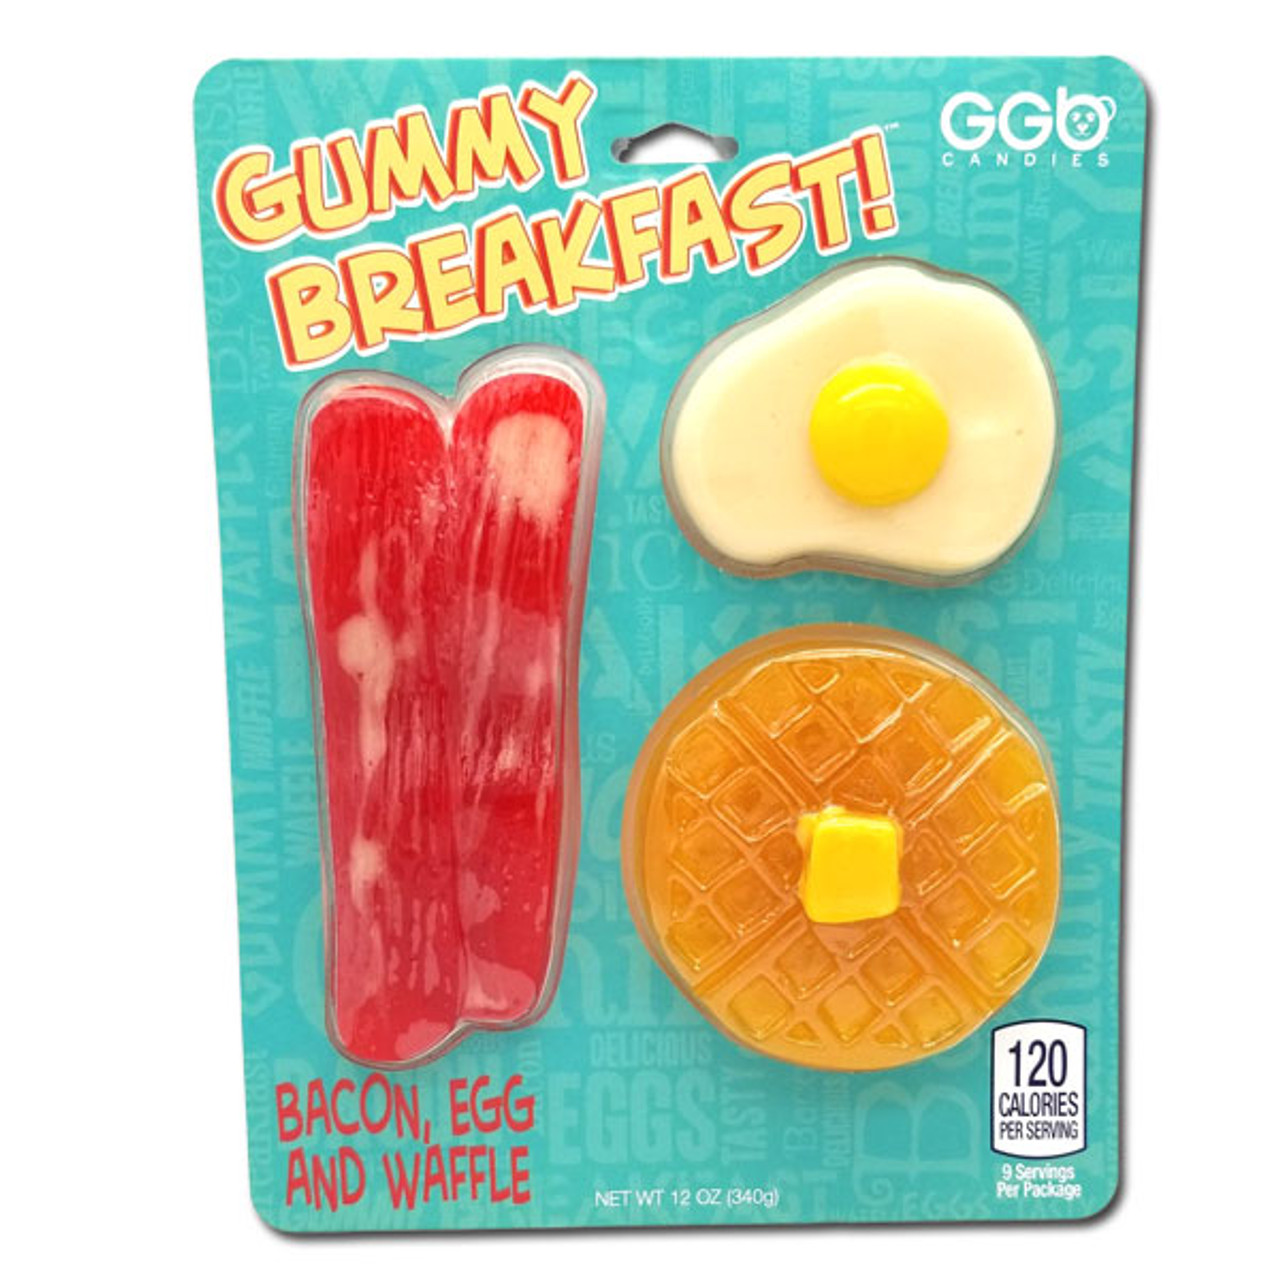 Gummi Fried Eggs - 1 lb Bag